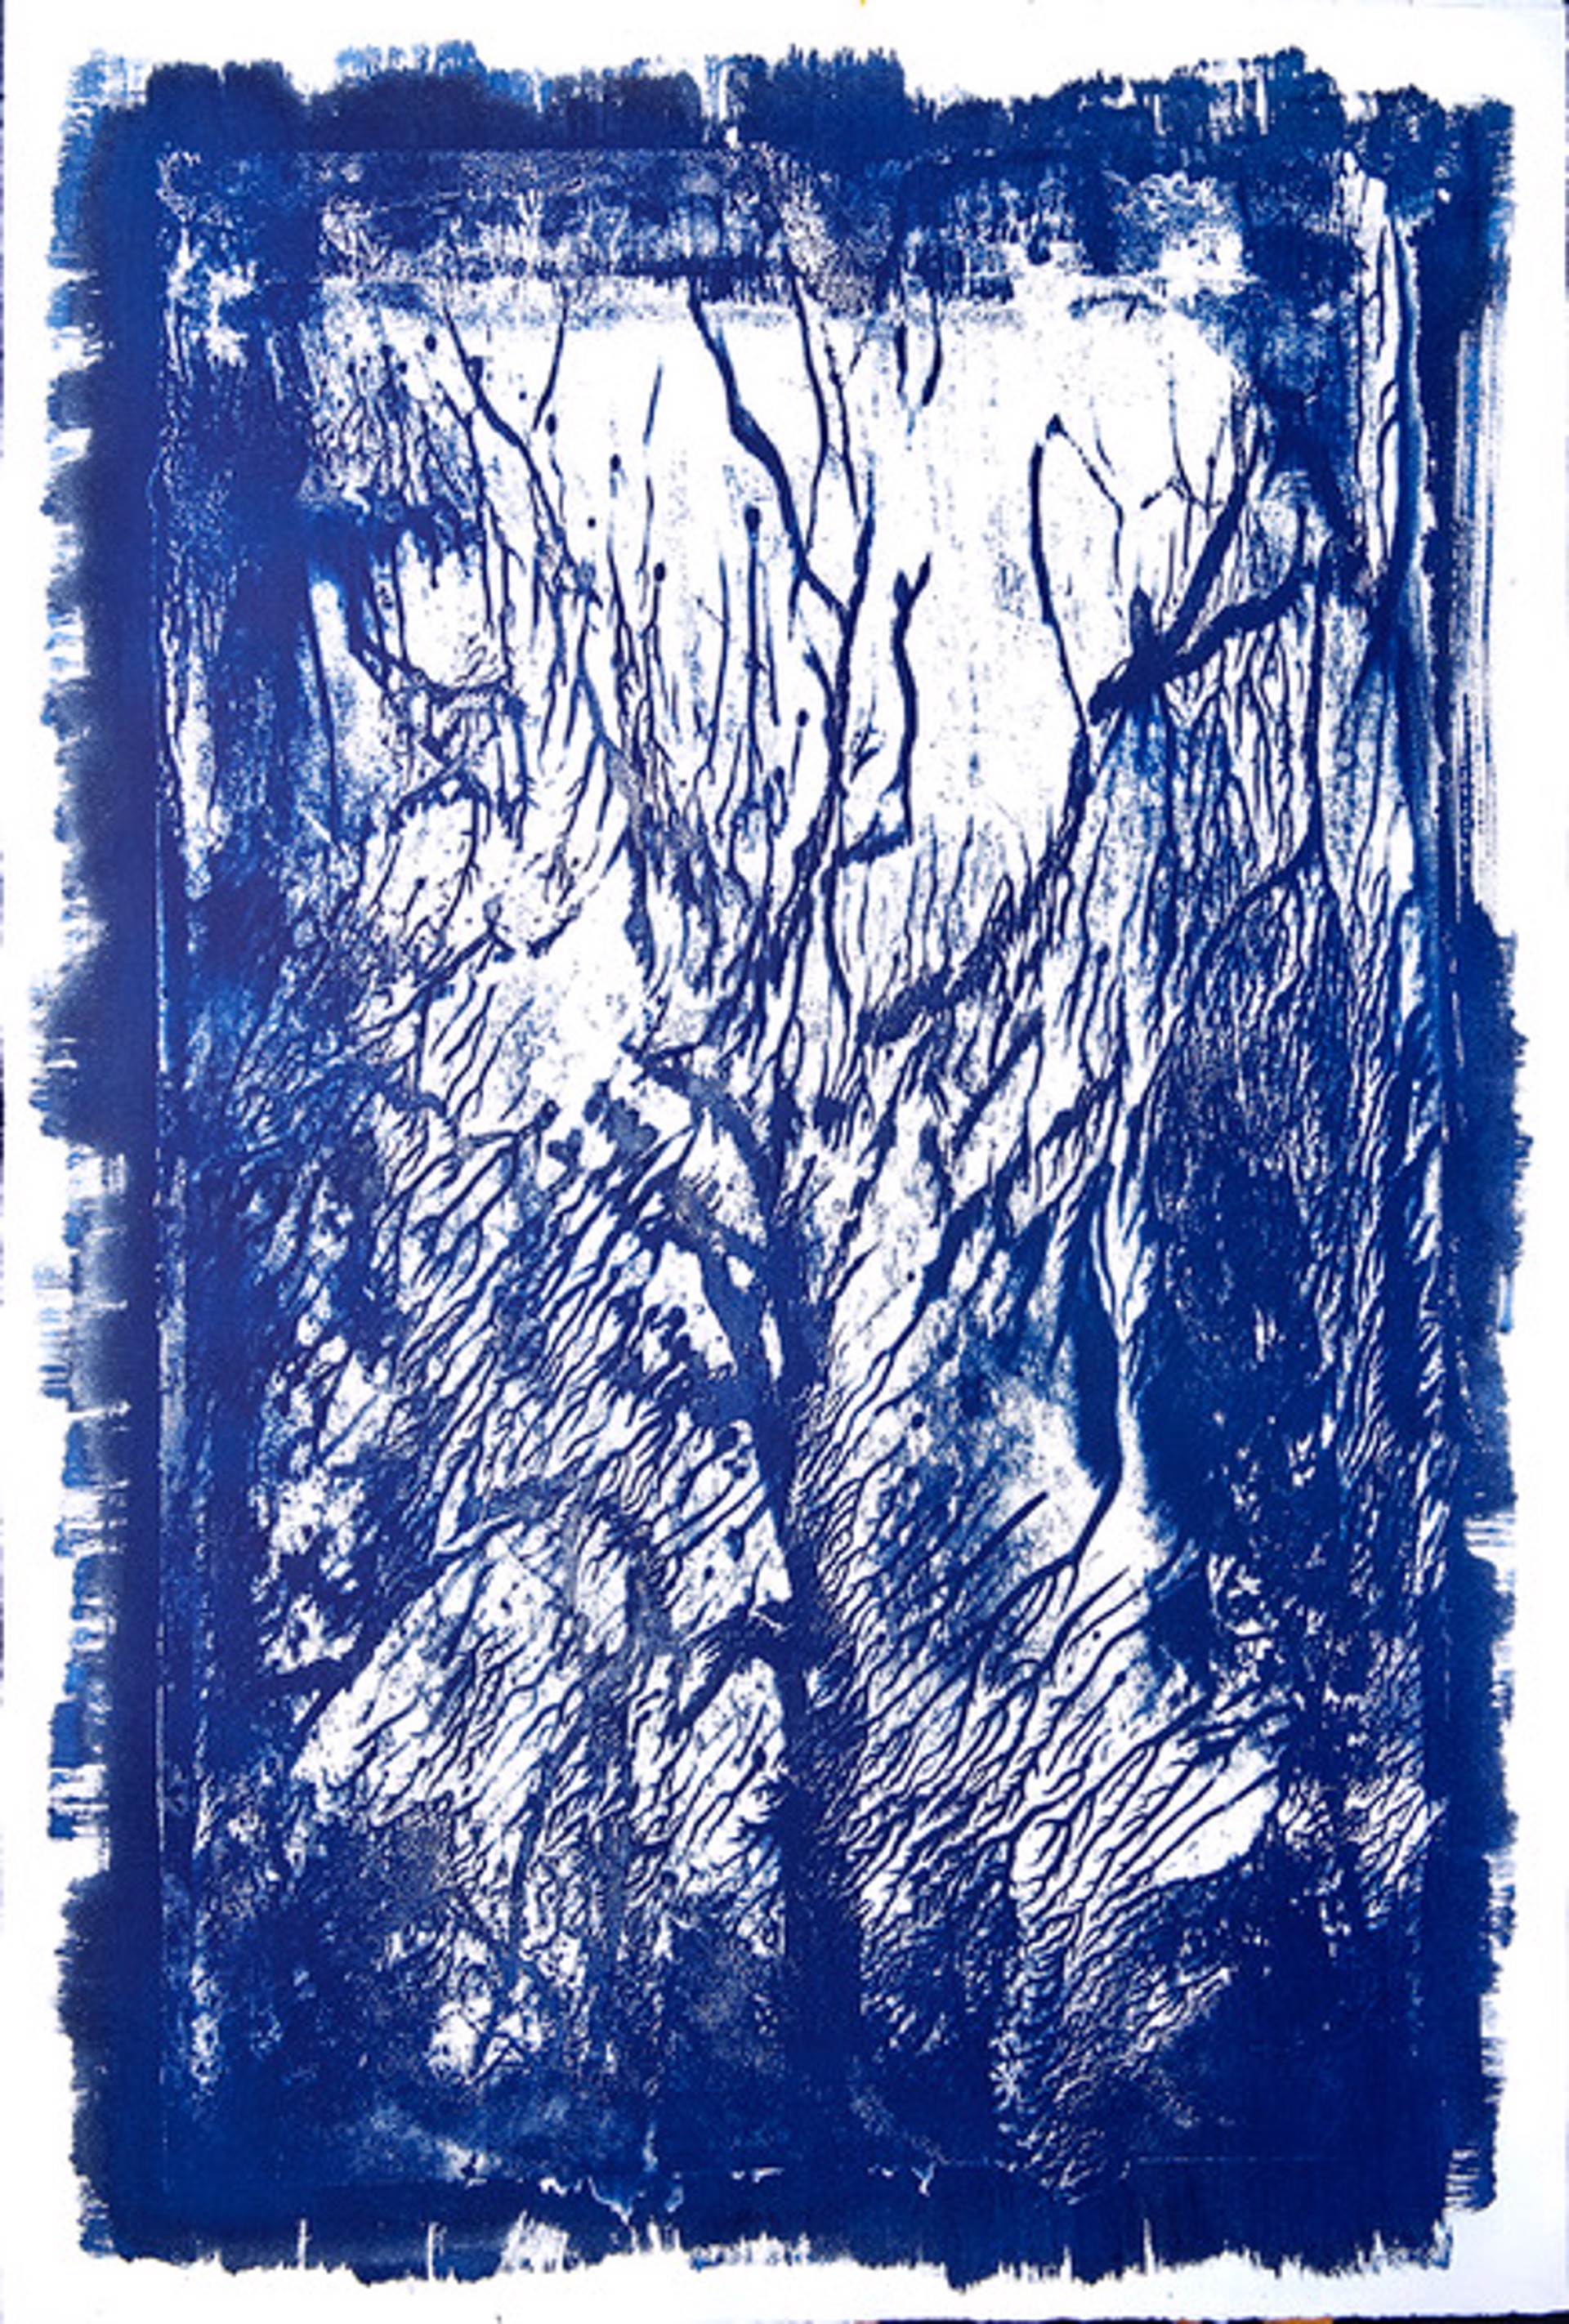 New Cyanotype Trees #2 by Michael Eastman